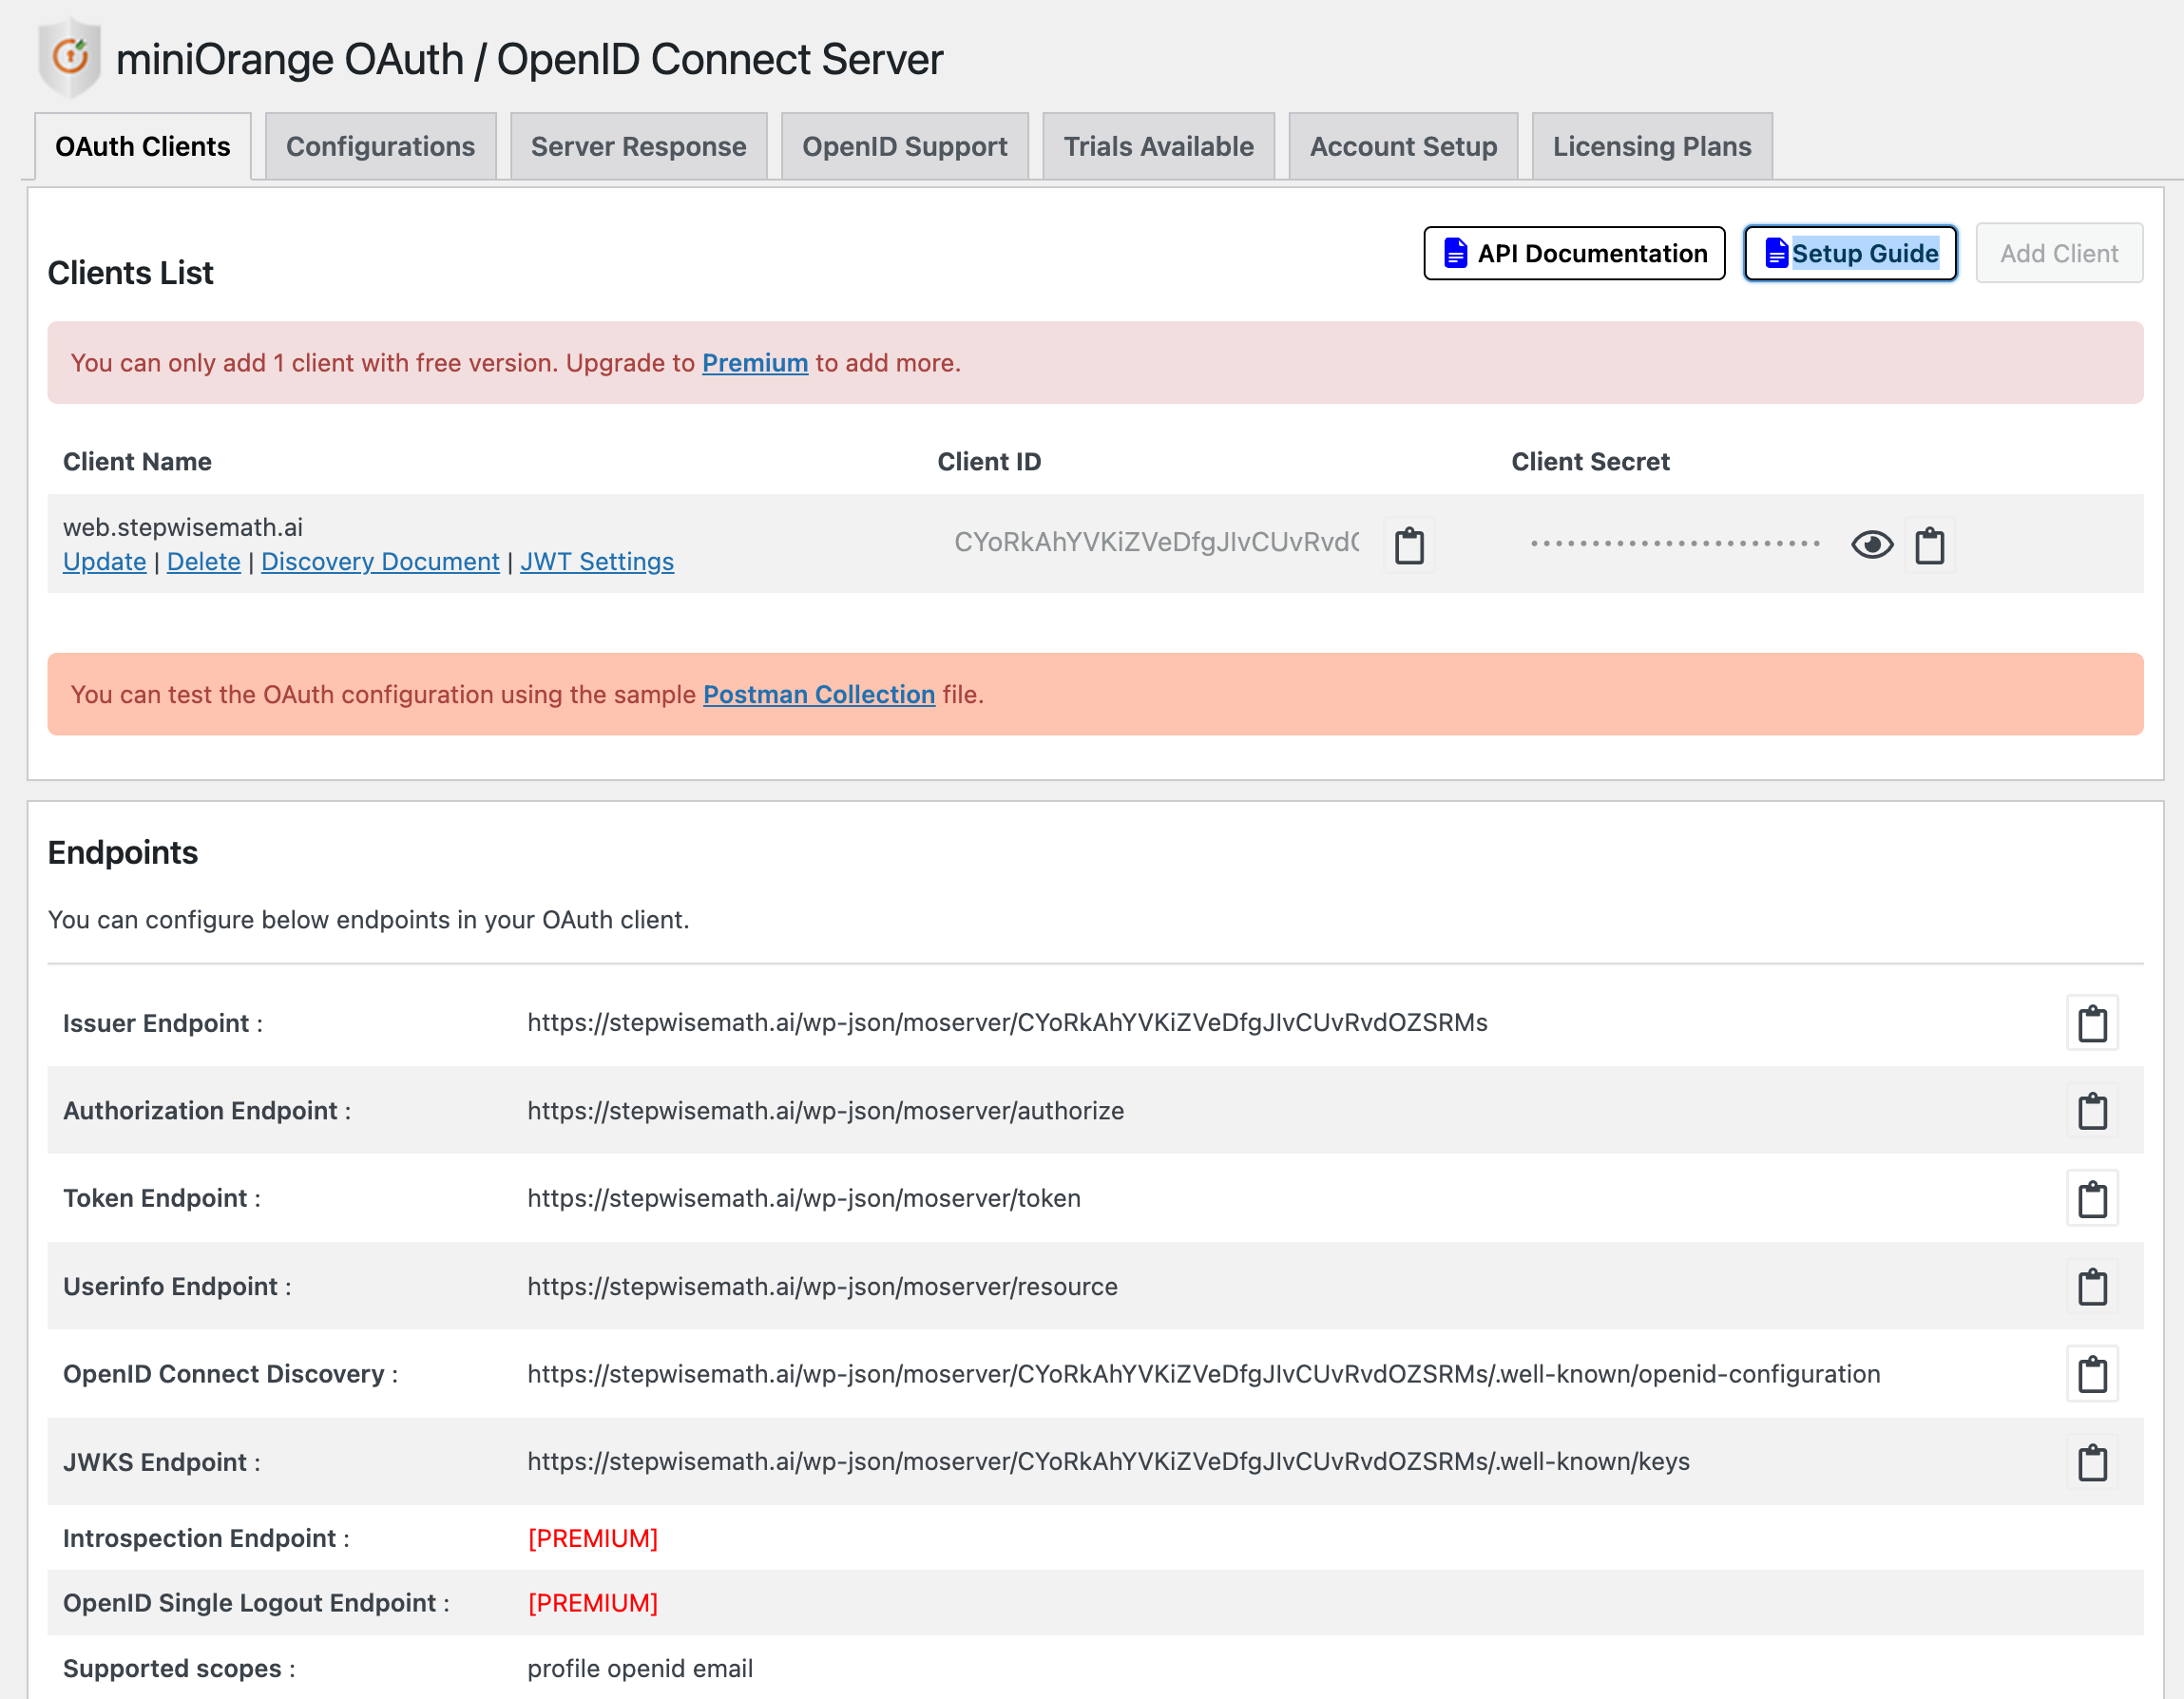 miniOrange OAuth configuration page